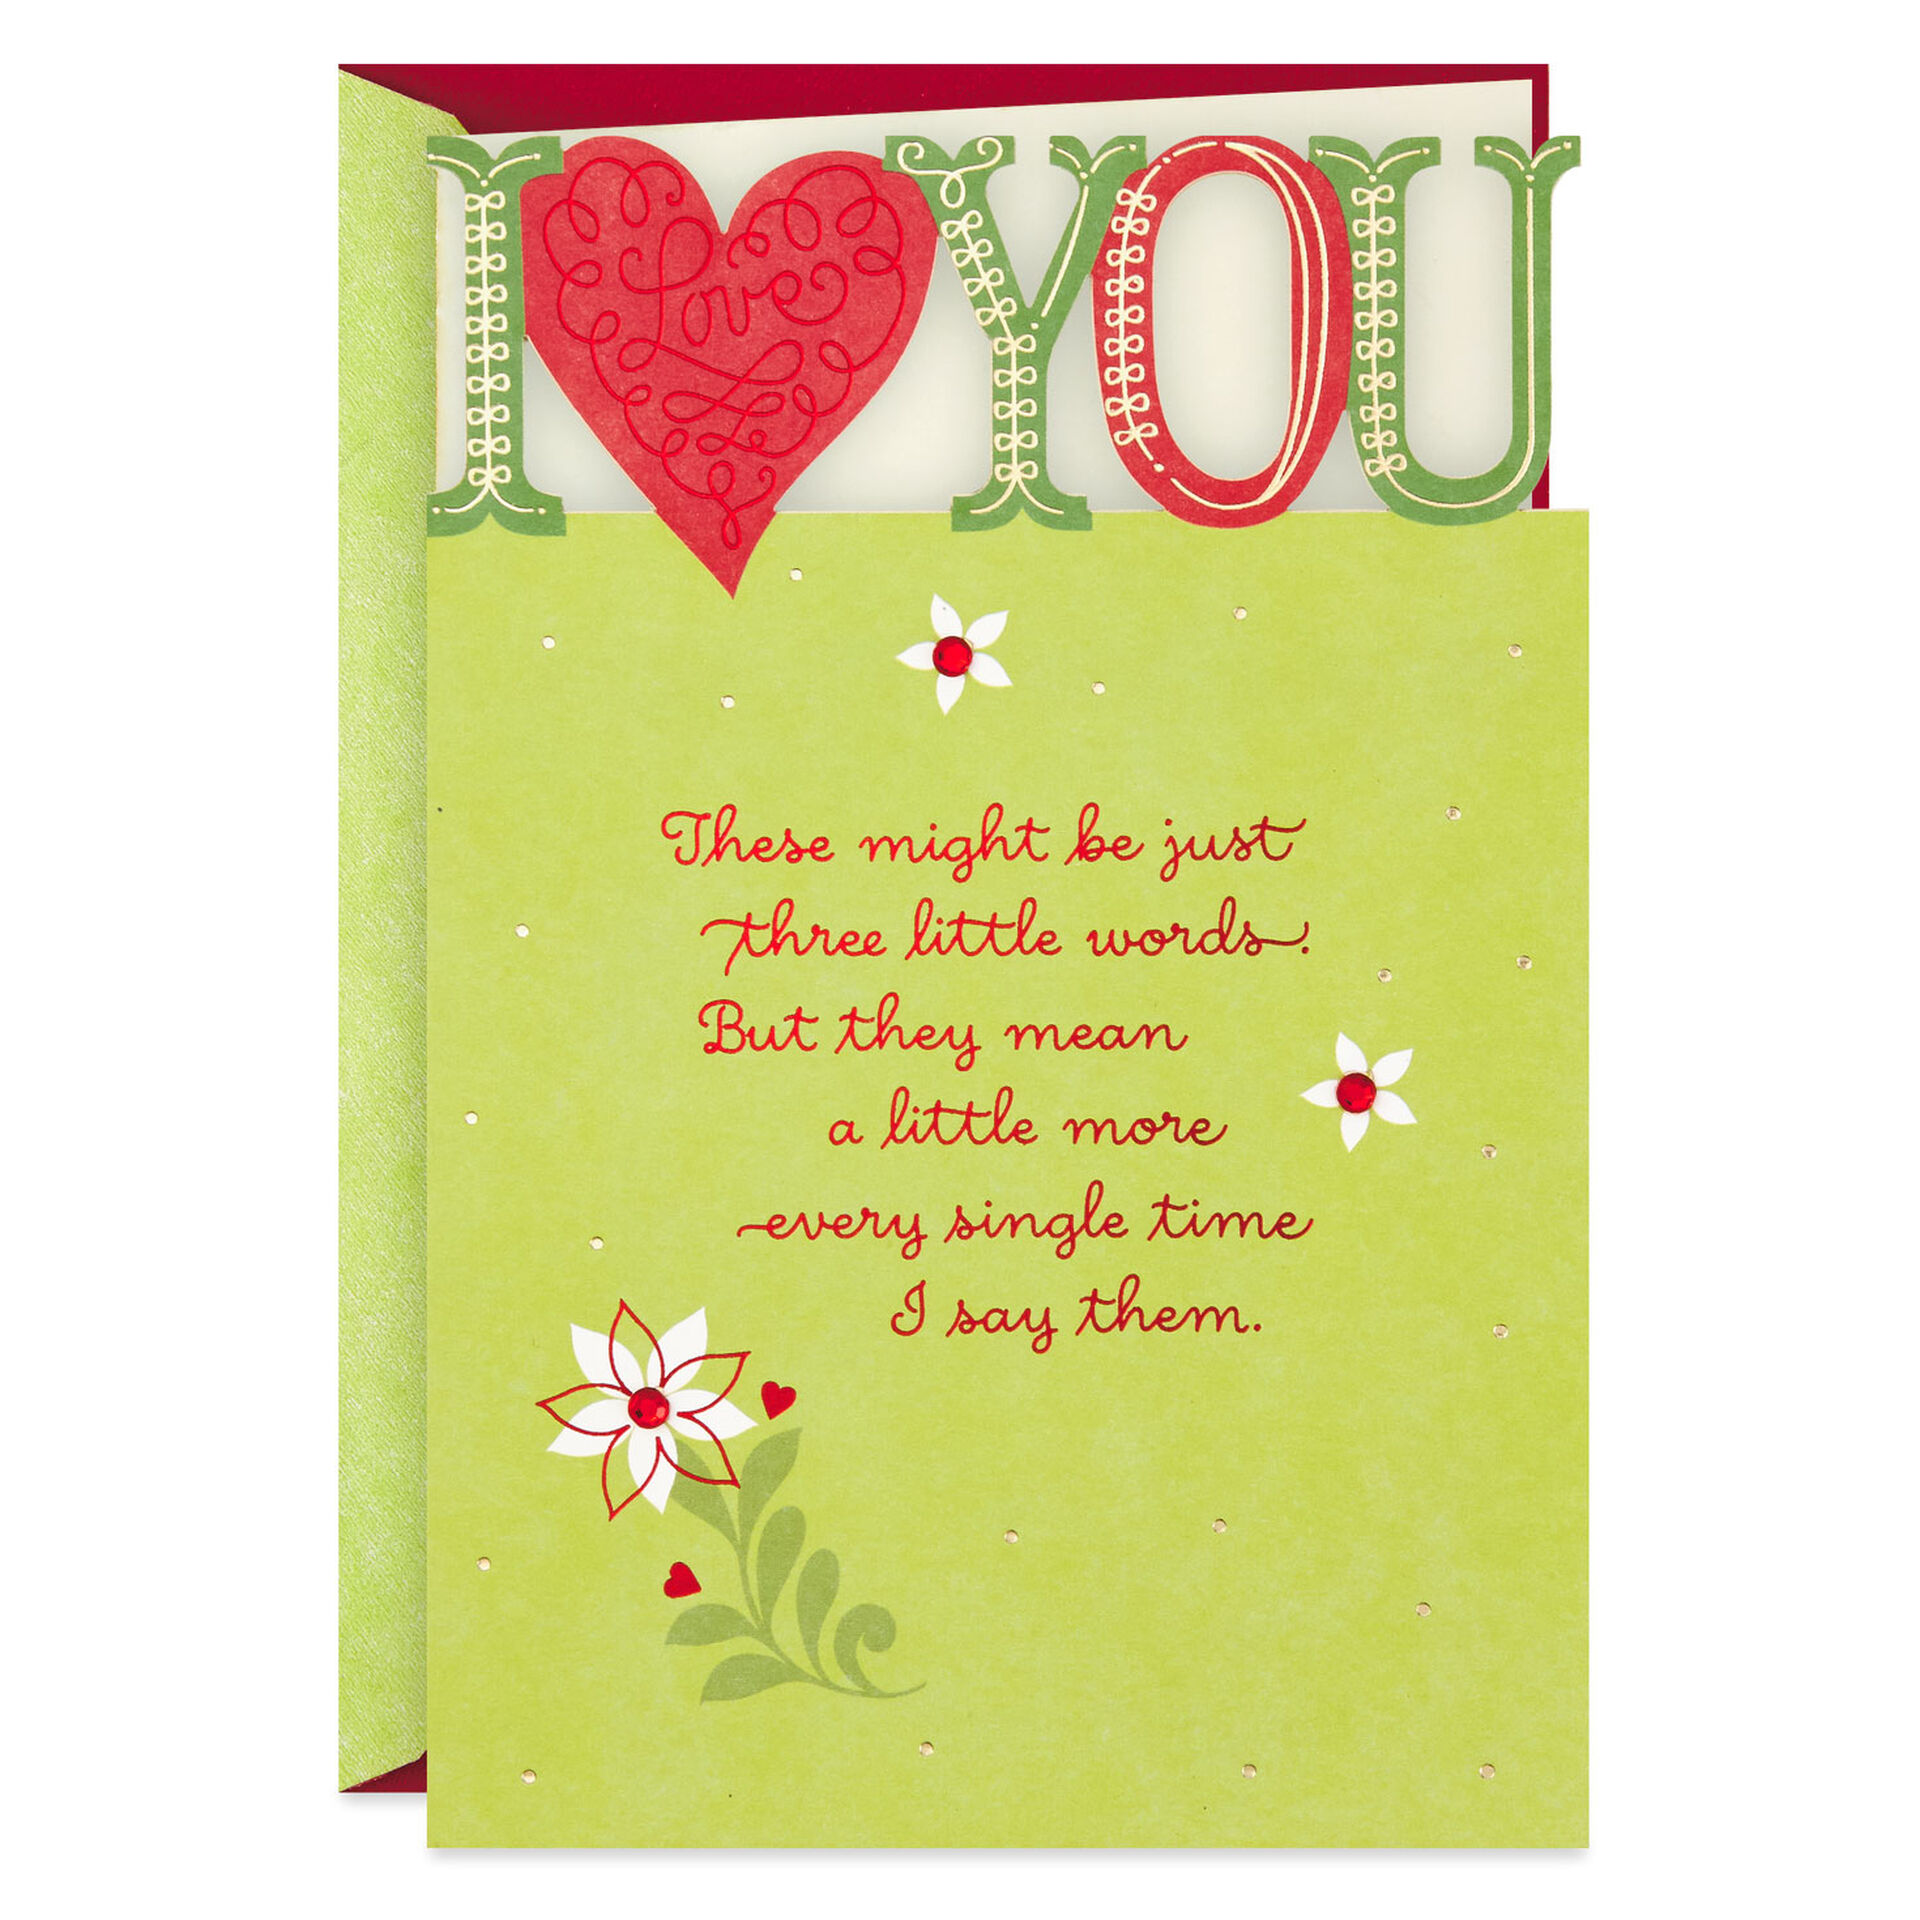 I Love You Romantic Christmas Card Greeting Cards Hallmark